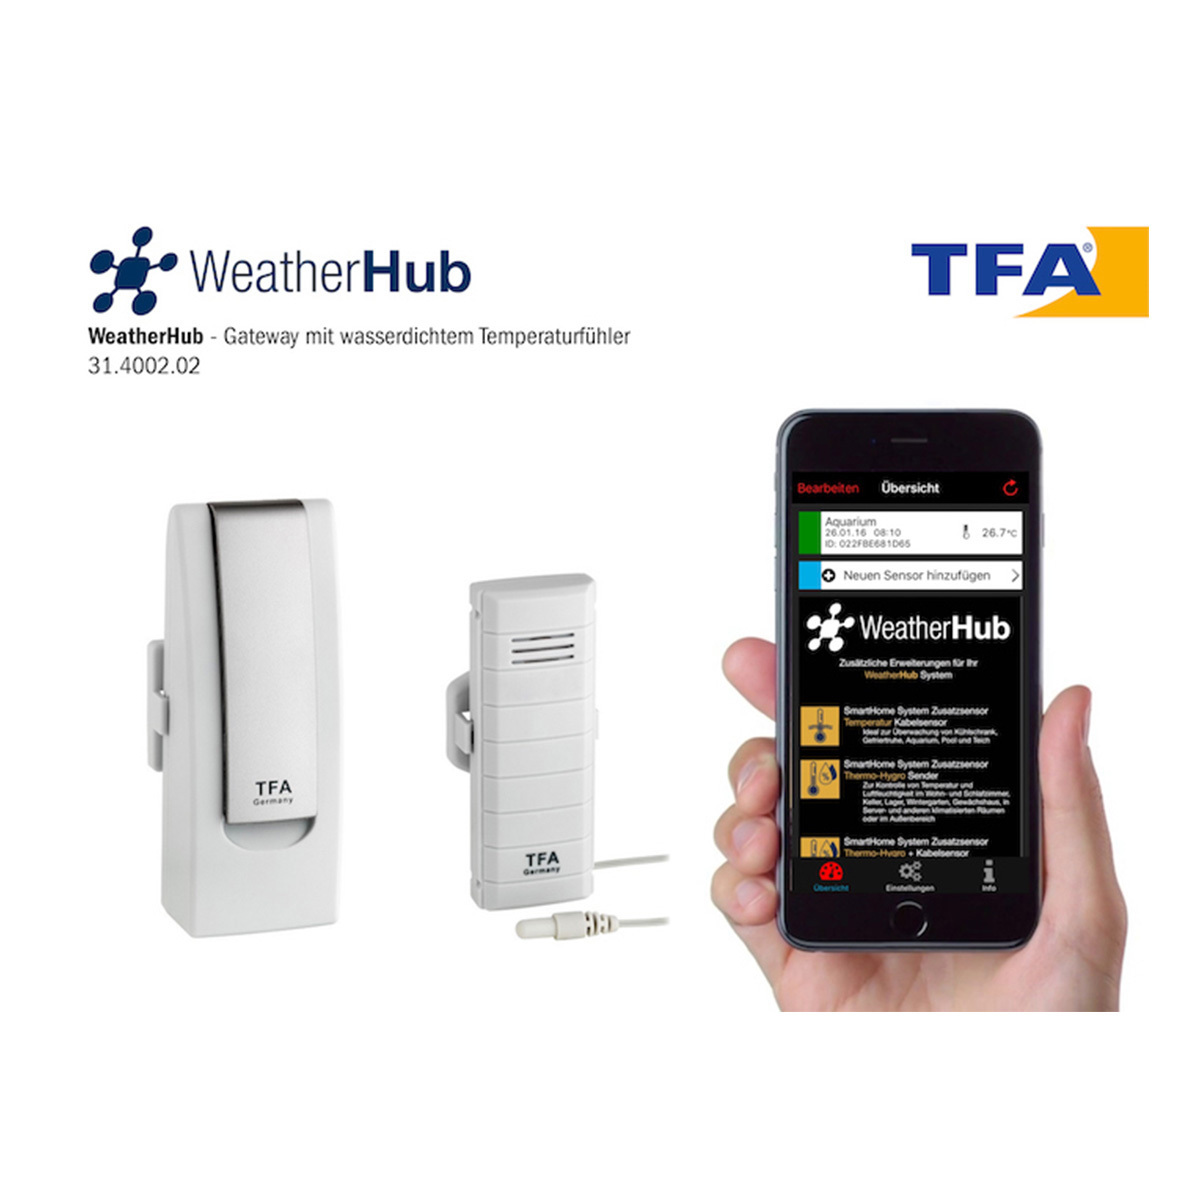 TFA-Dostmann 31.4012.02 Weatherhub Observer Web Monitoring System avec hygrometteur Compatible avec système Weatherhub 